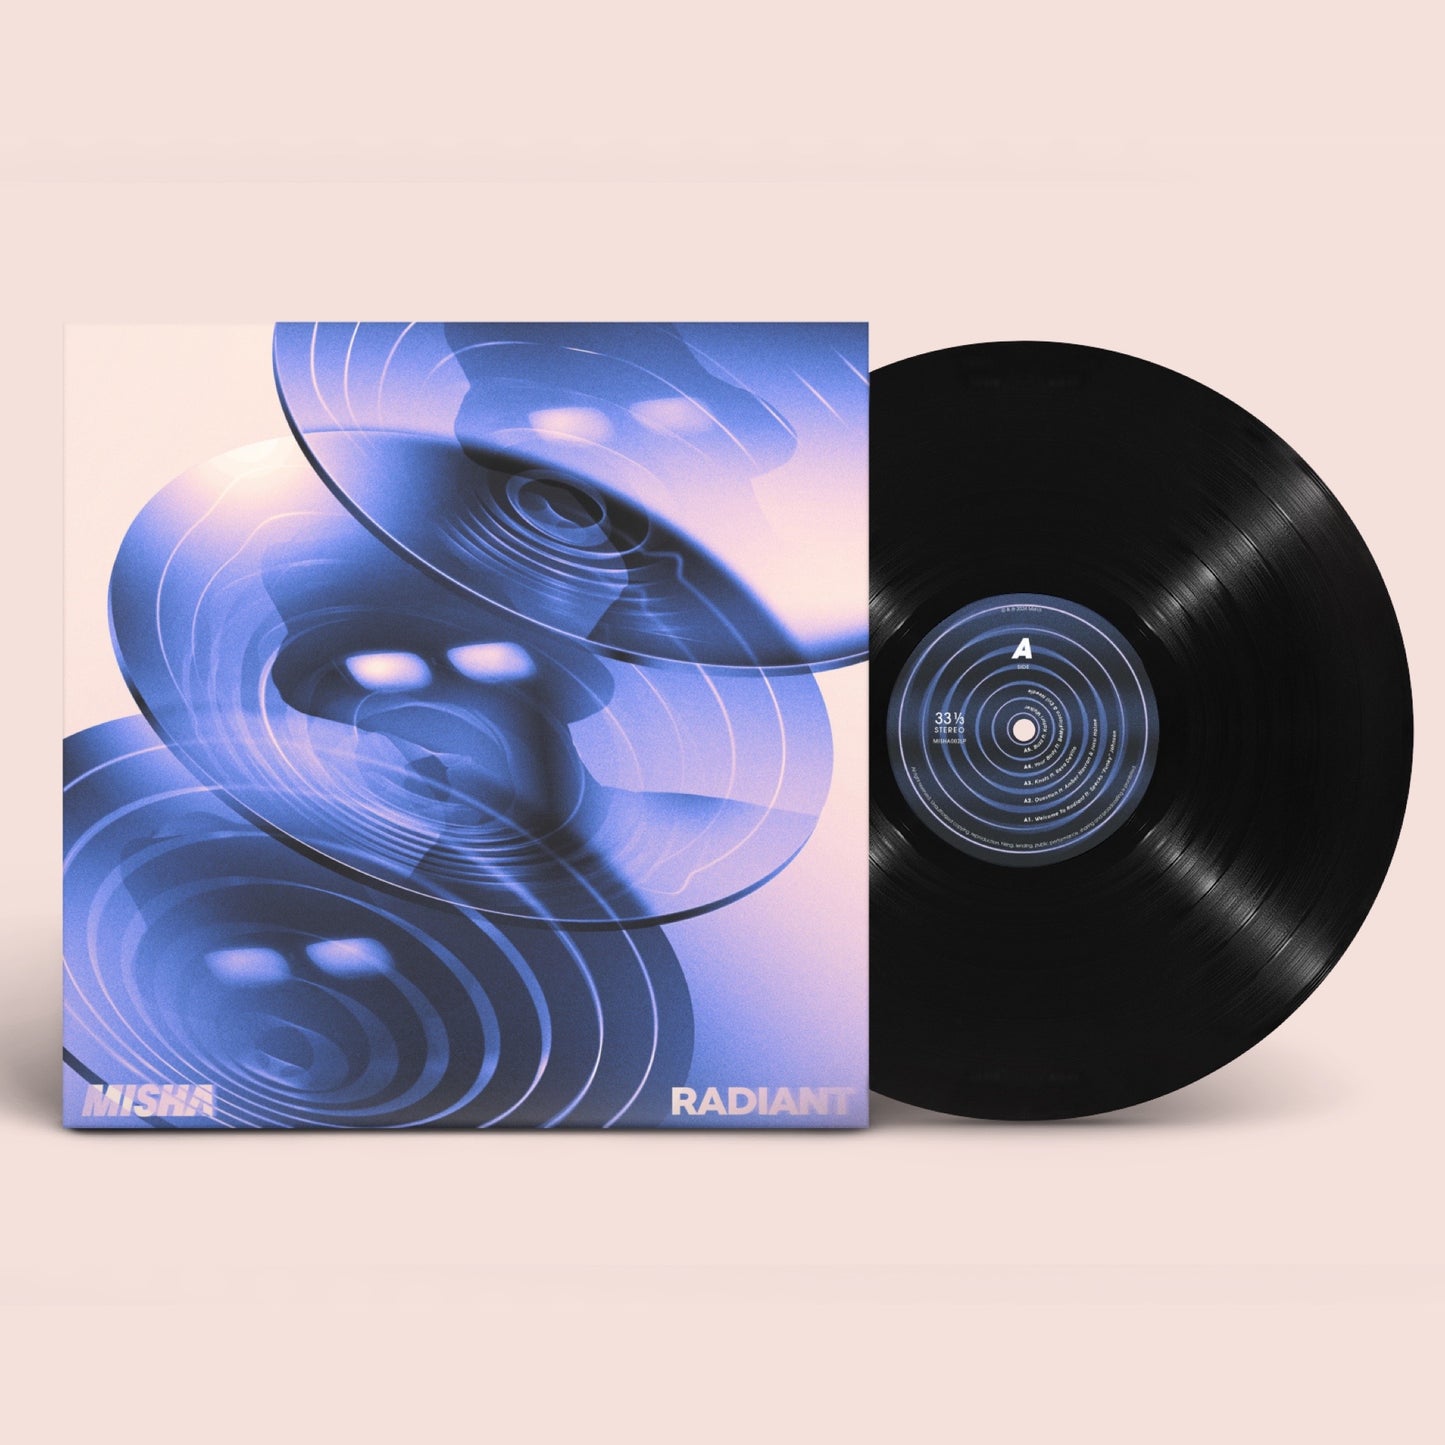 01. Misha - Radiant LP (Vinyl)